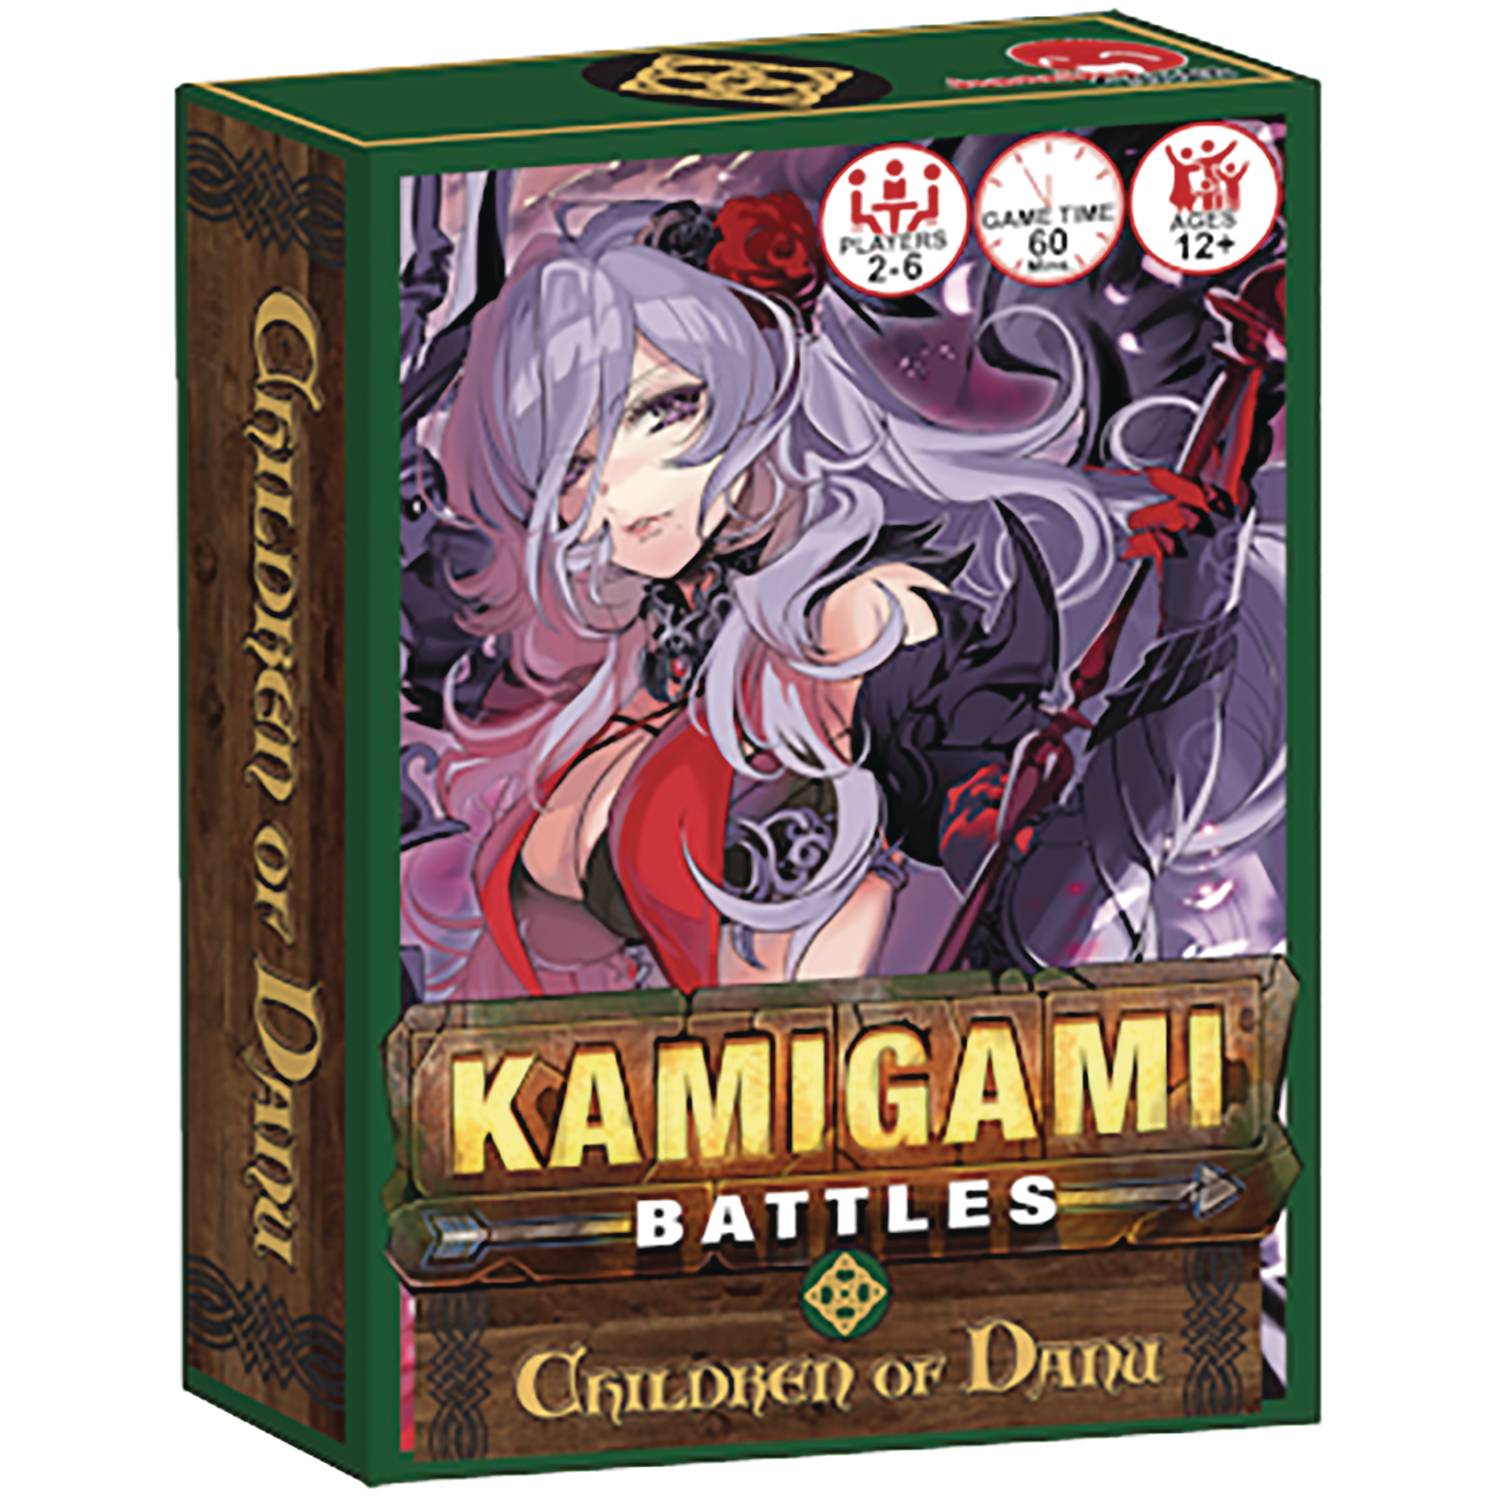 Kamigami Battles Children Danu Deck Building Game Expansion